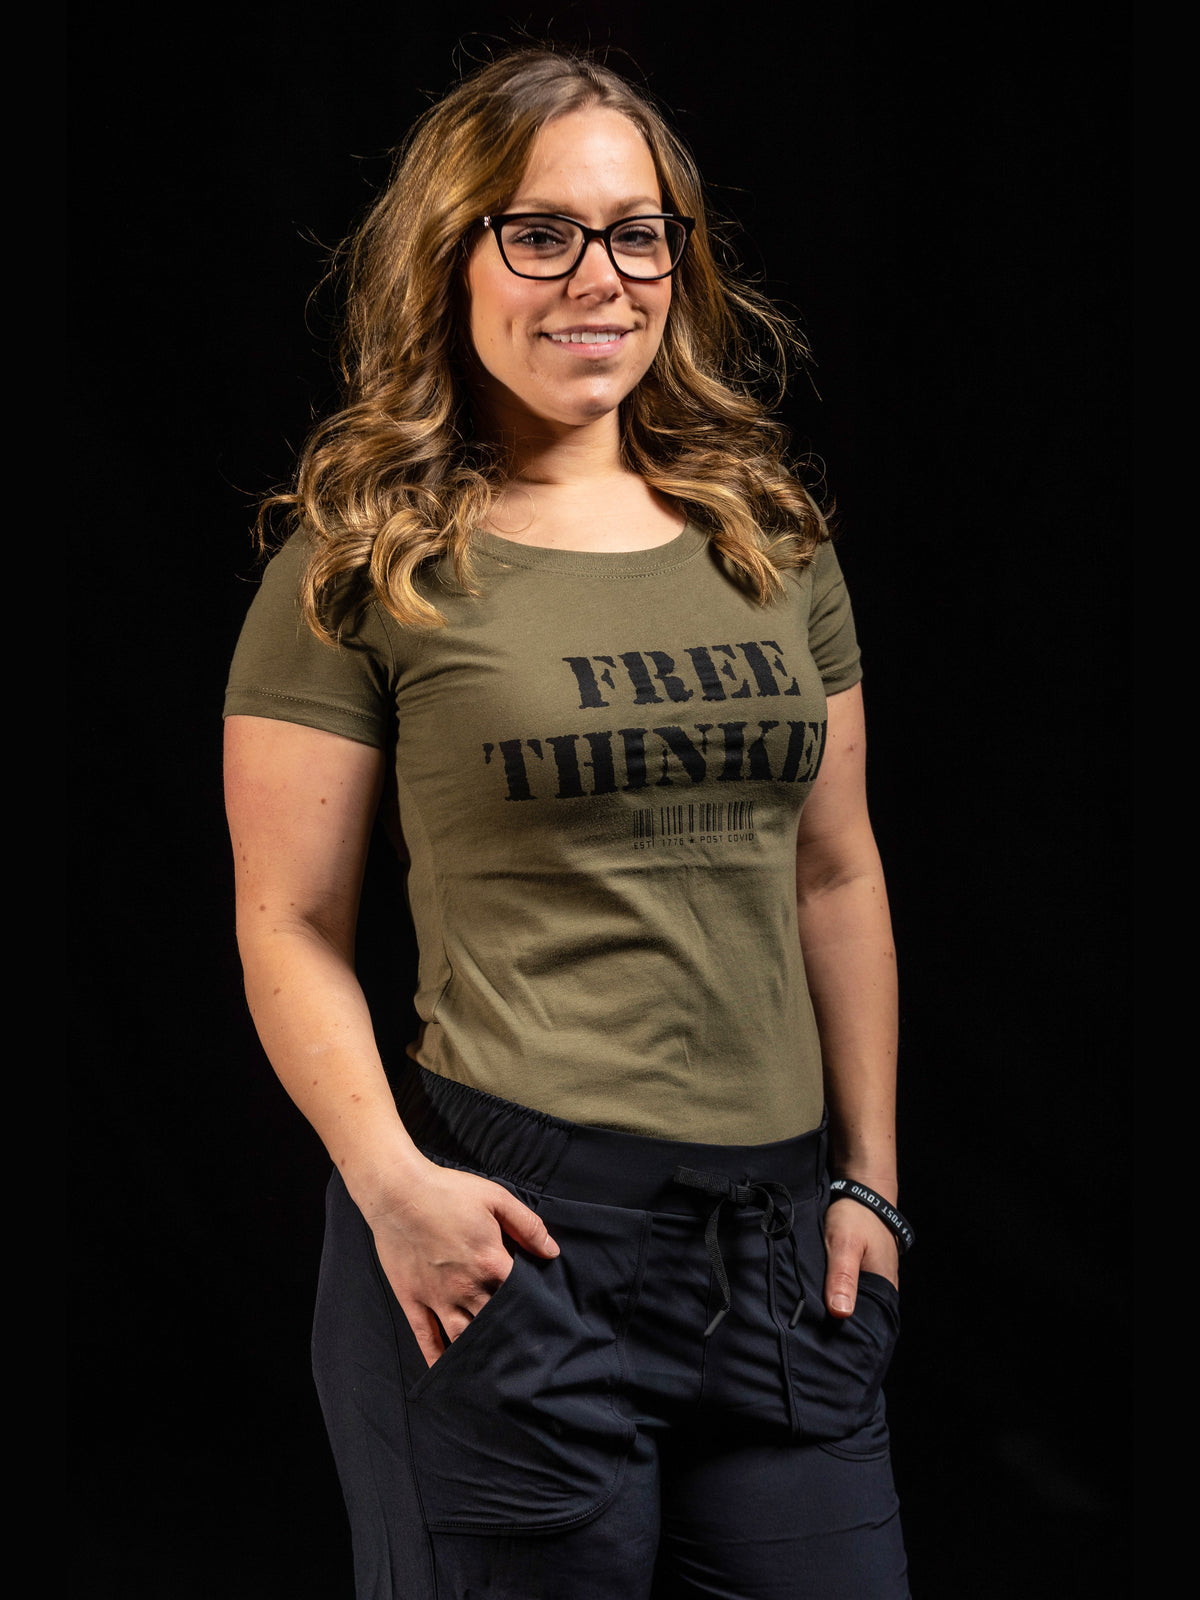 FREE THINKER Womens Crewneck T-Shirt